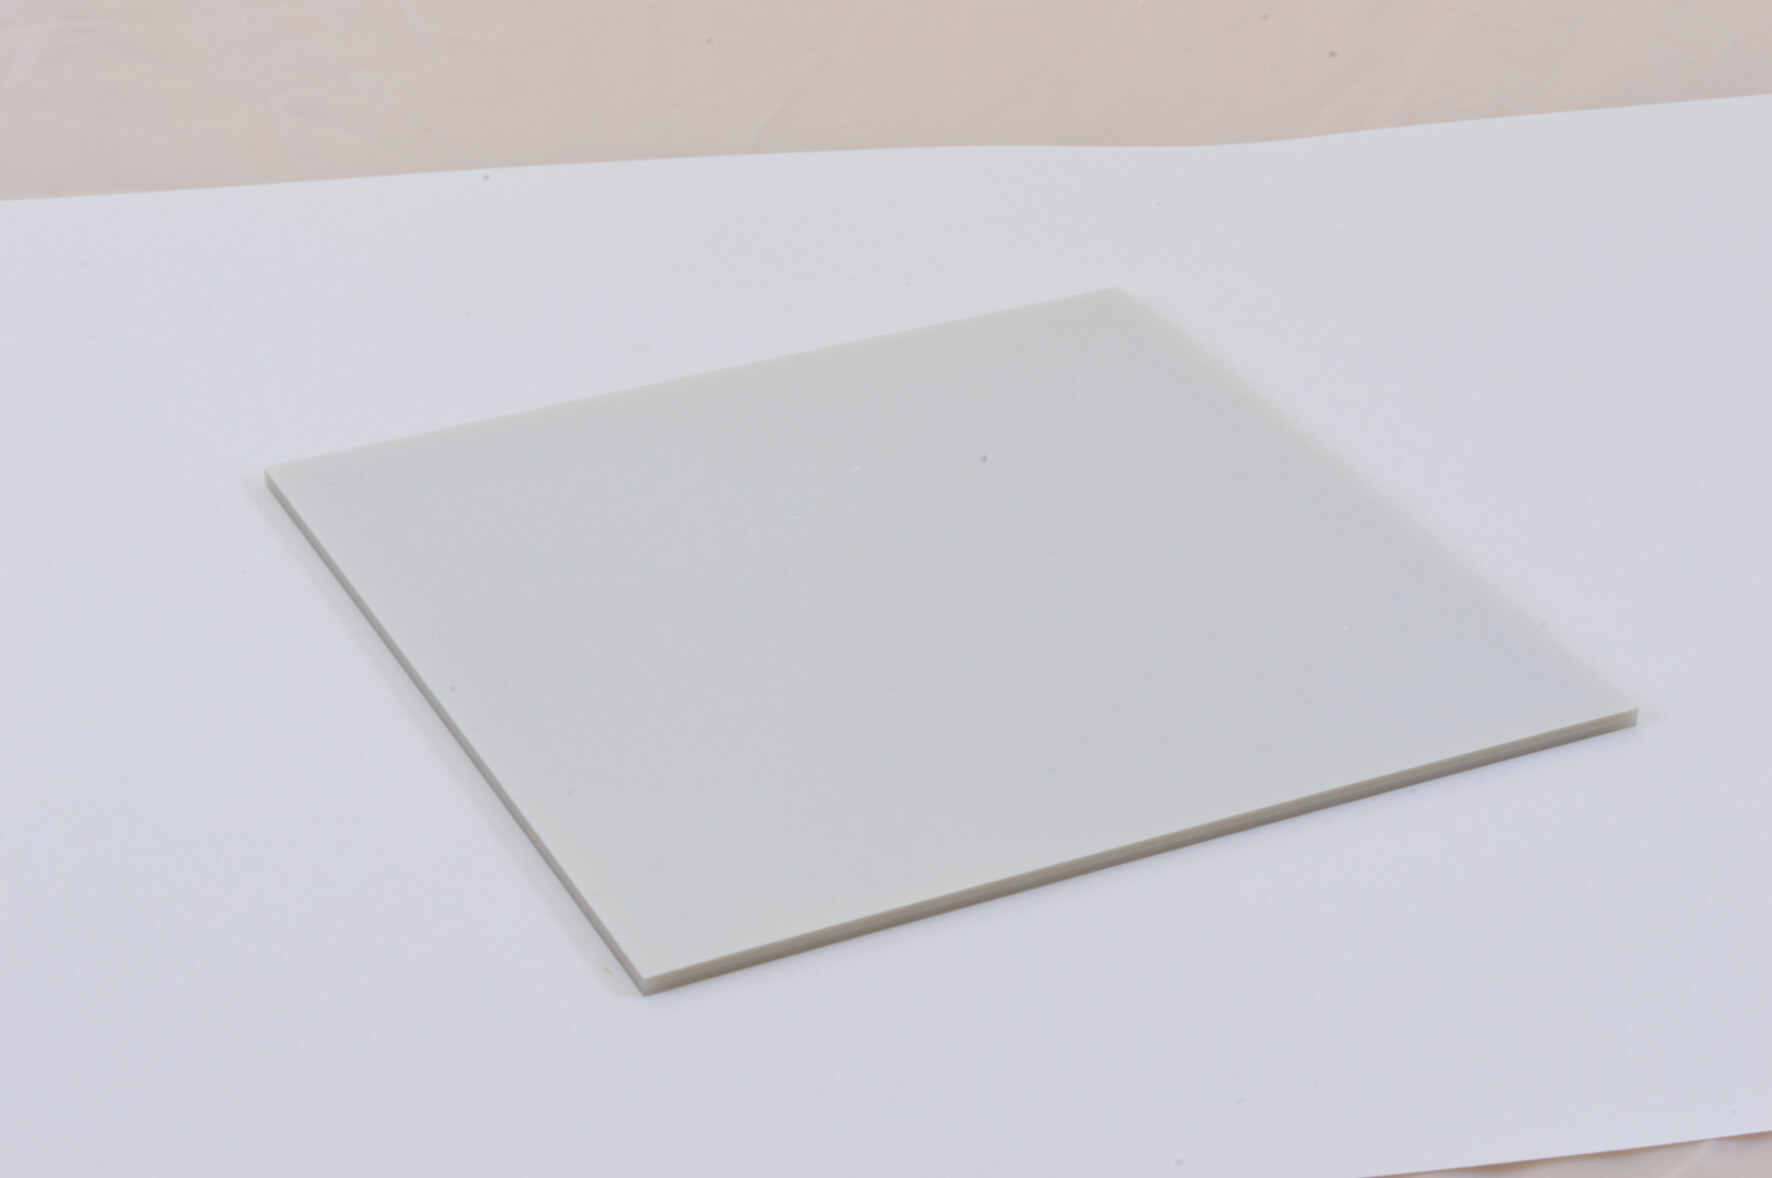 Pearlescent Cast Acrylic 3mm Sheet - Platinum 600 x 400mm